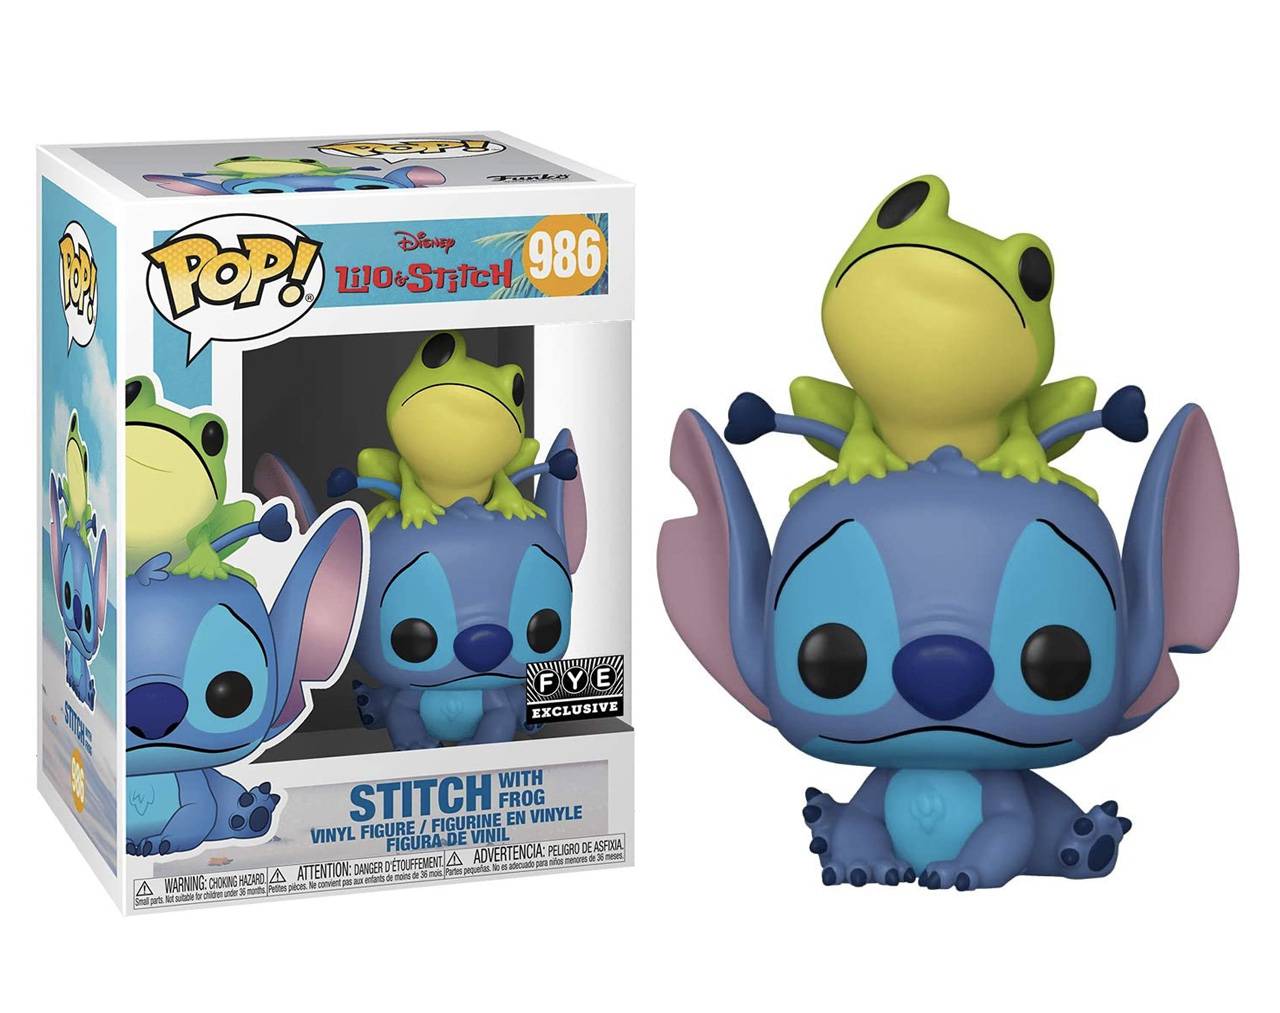 Stitch with Frog Pop! Vinyl